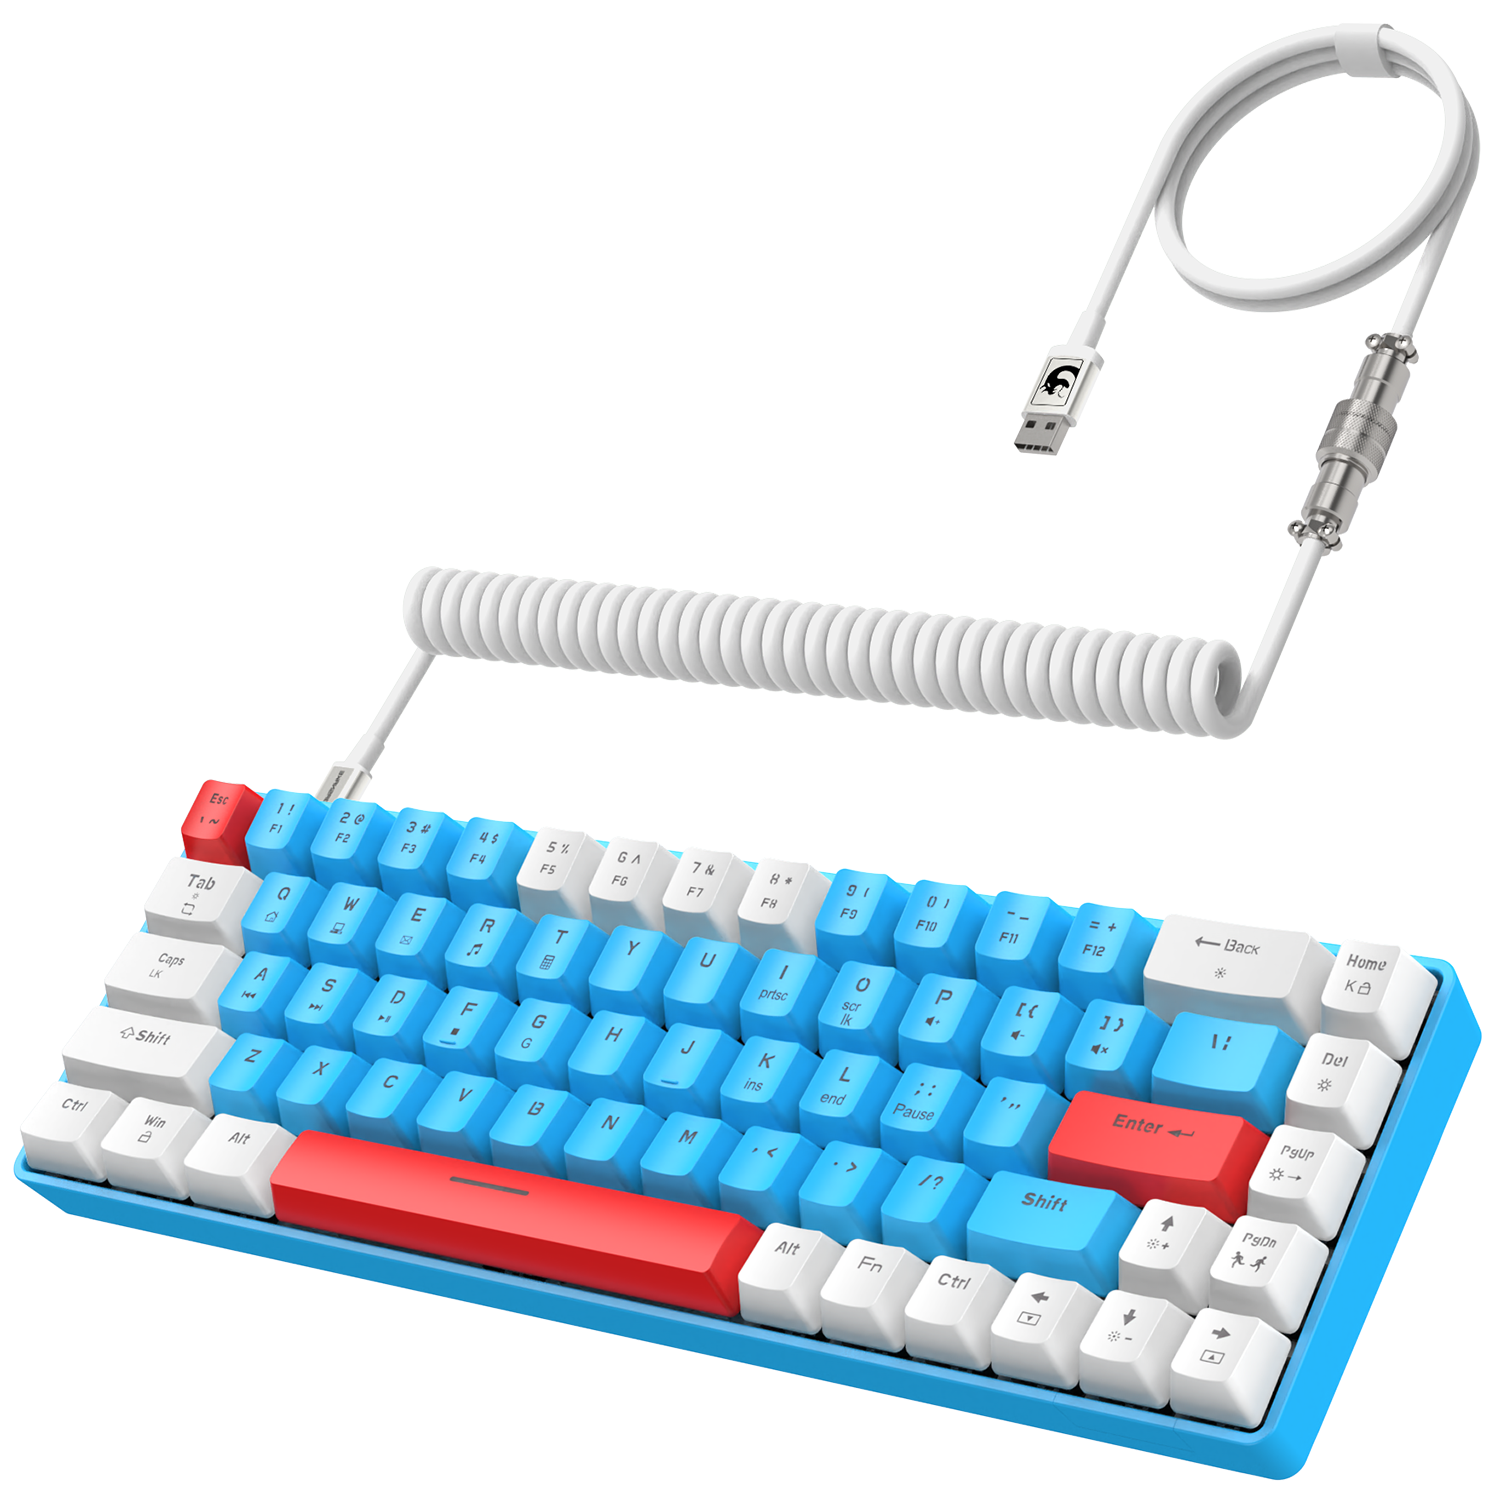 TMKB T68SE RGB USB Mini Gaming Mechanical Keyboard Red Switch 68